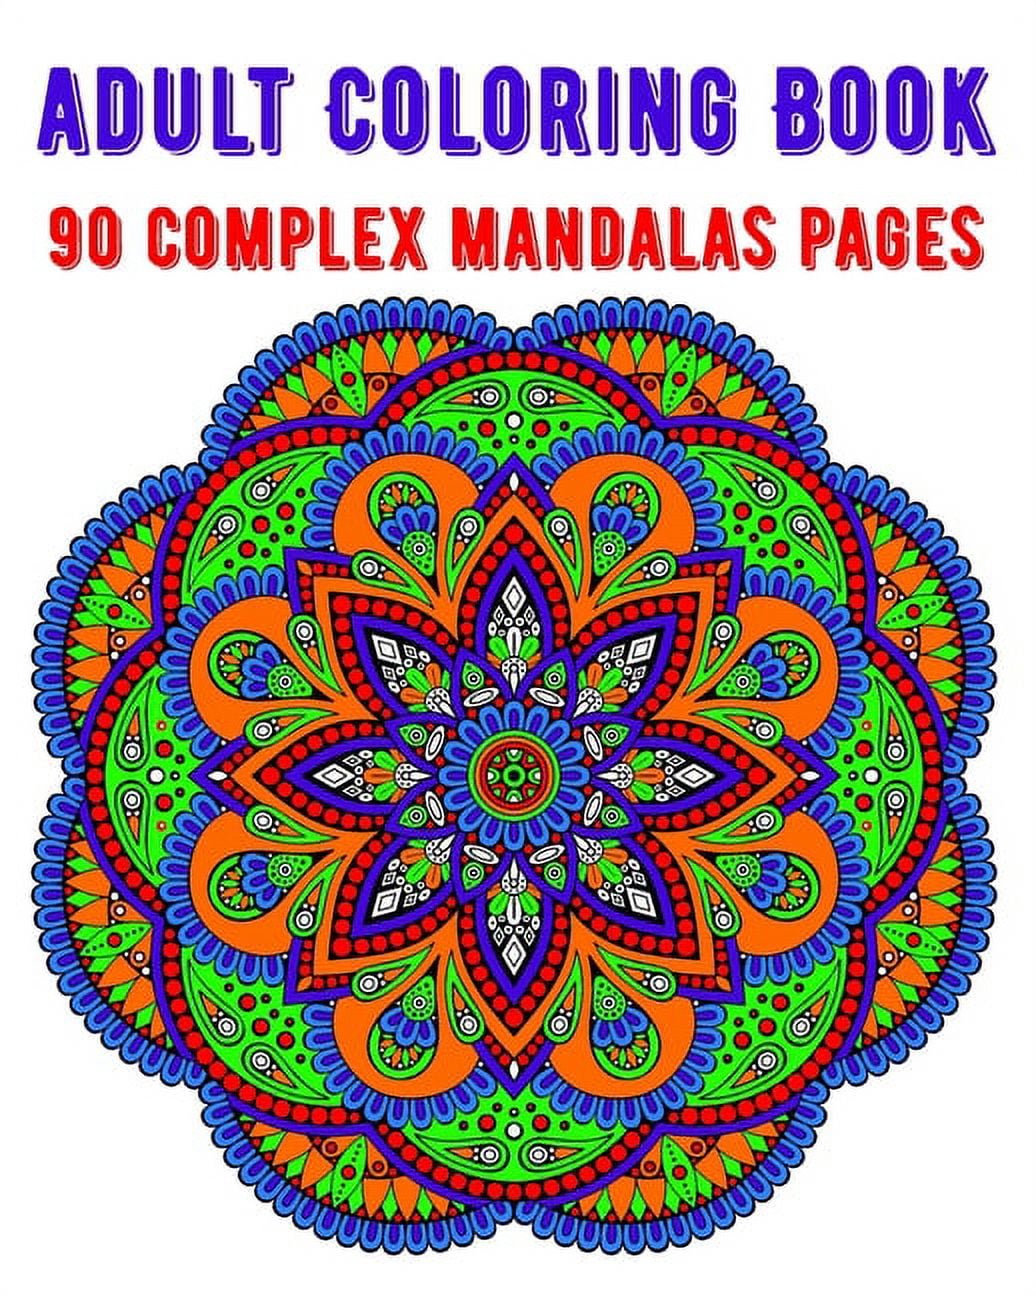 Mandala Coloring Pages, Adult Coloring Pages, Mandala Art, Mindful Coloring